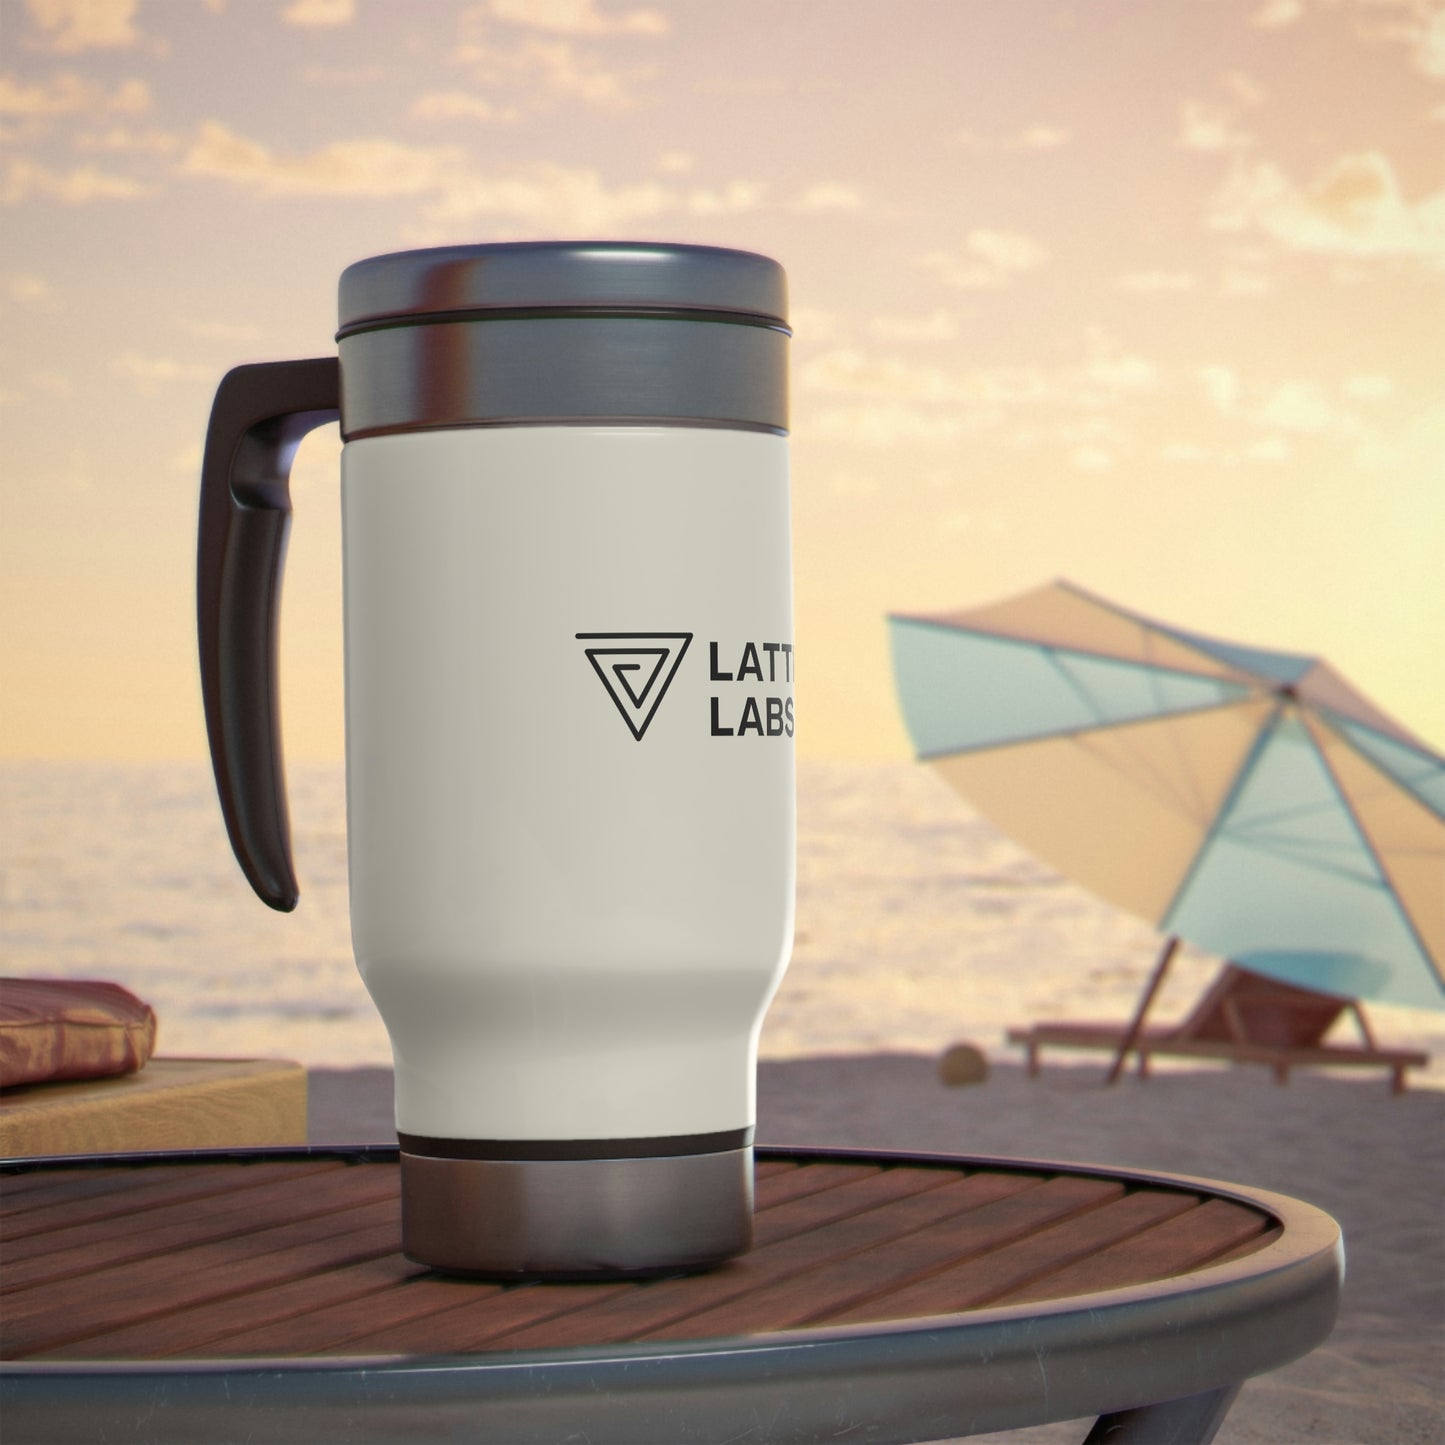 Lattice Labs Stainless Steel Travel Mug with Handle, 14oz